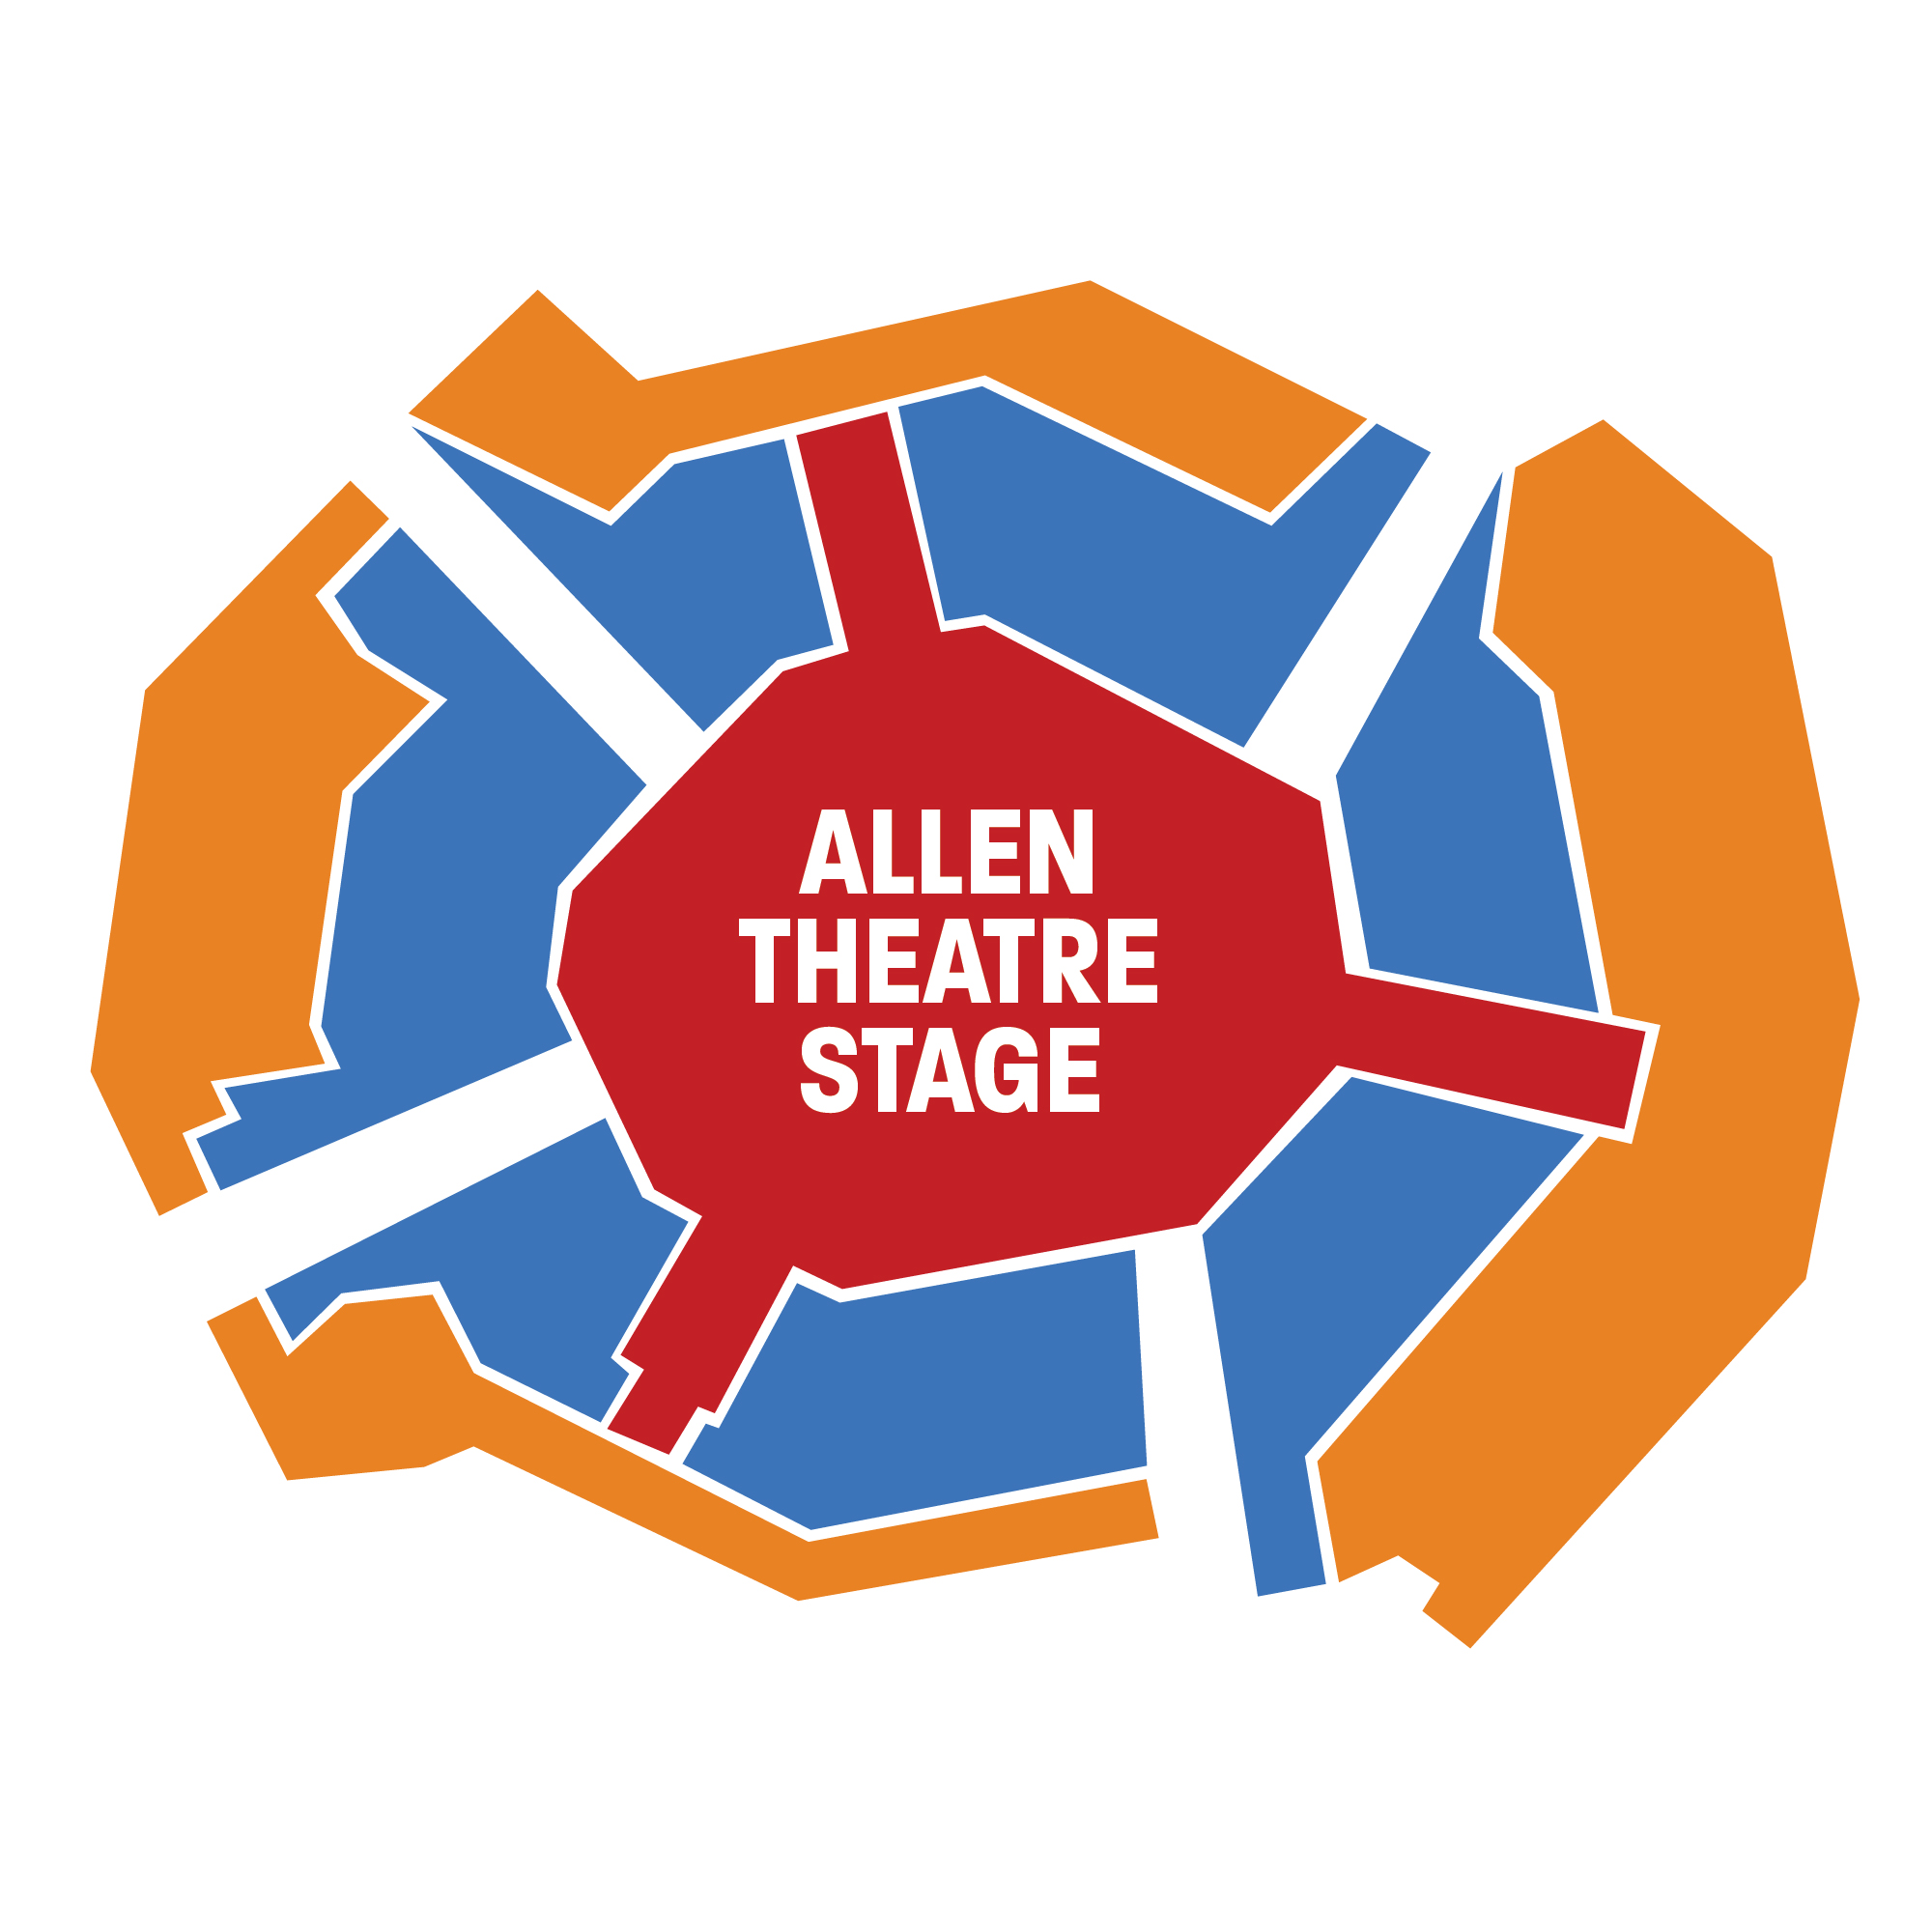 The Allen Theatre